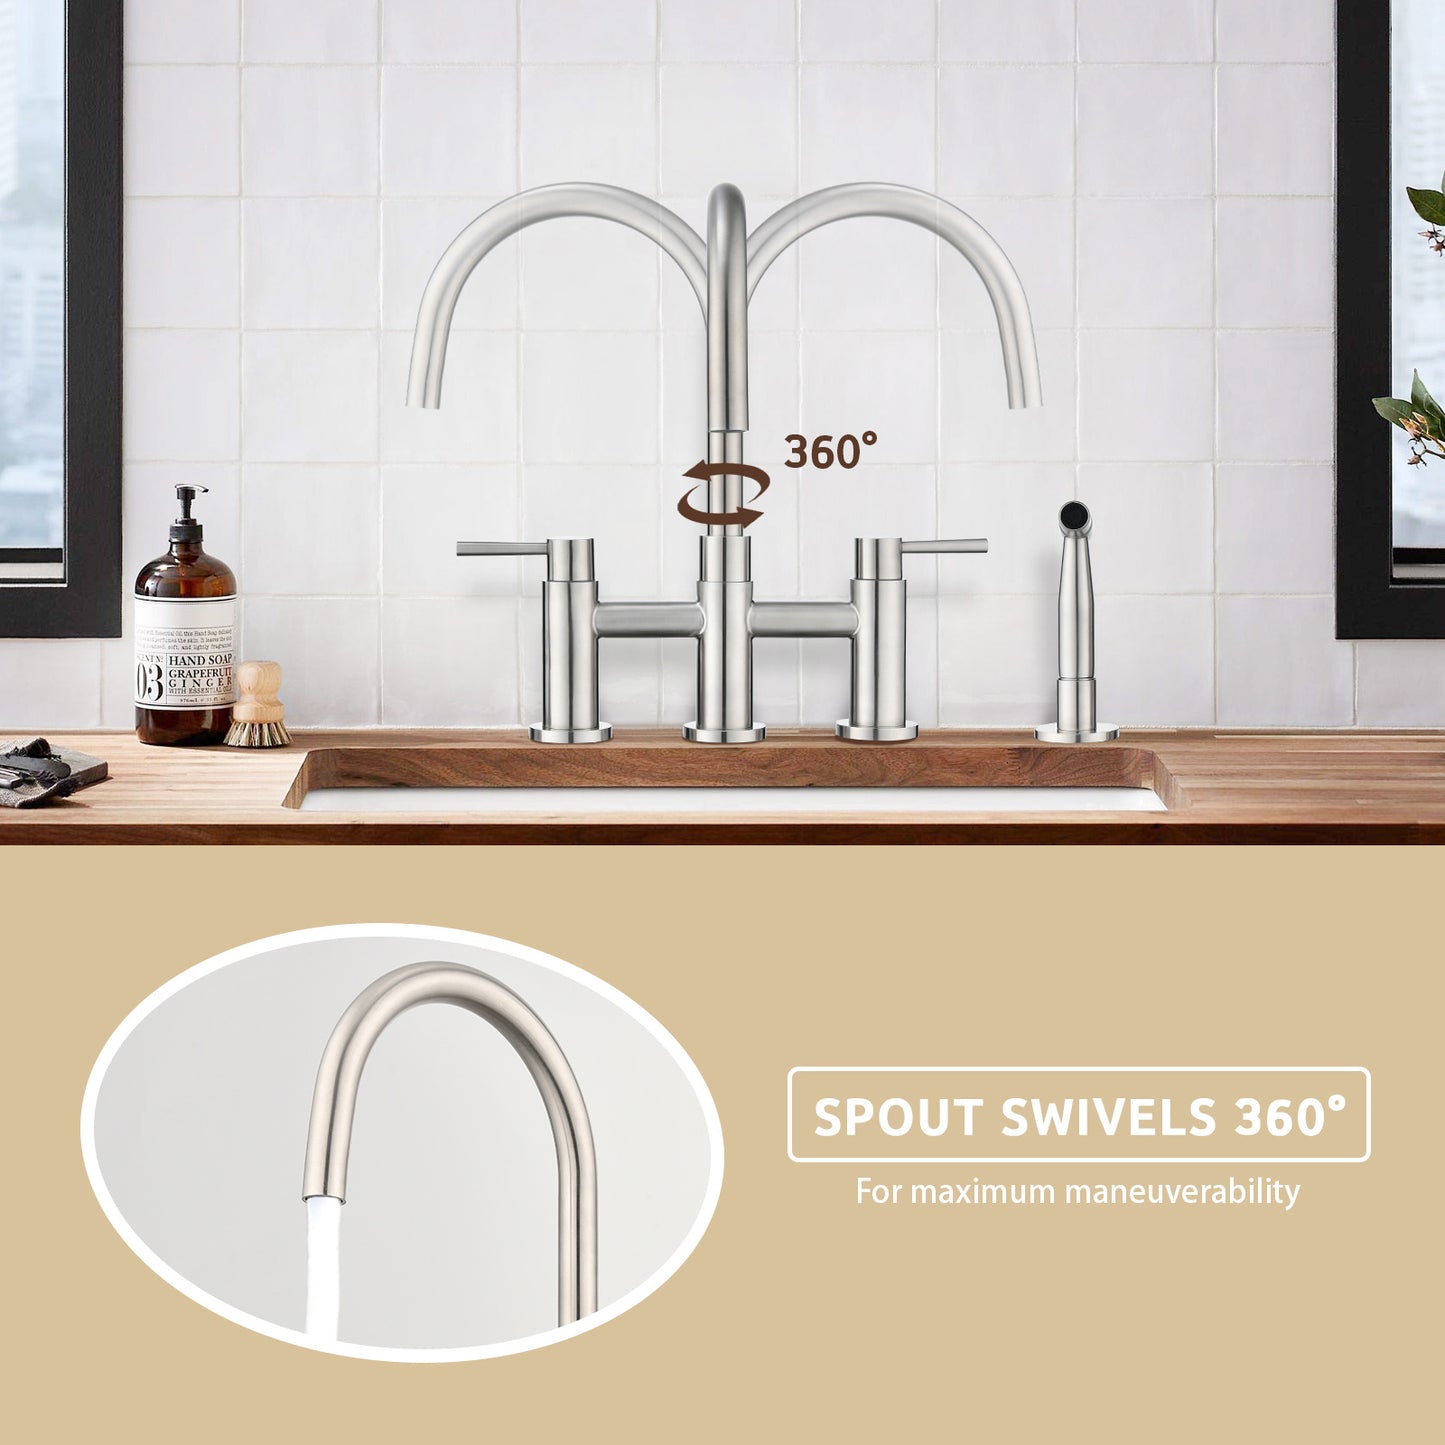 A|M Aquae Double Handle Bridge Kitchen Faucet with Side Spray